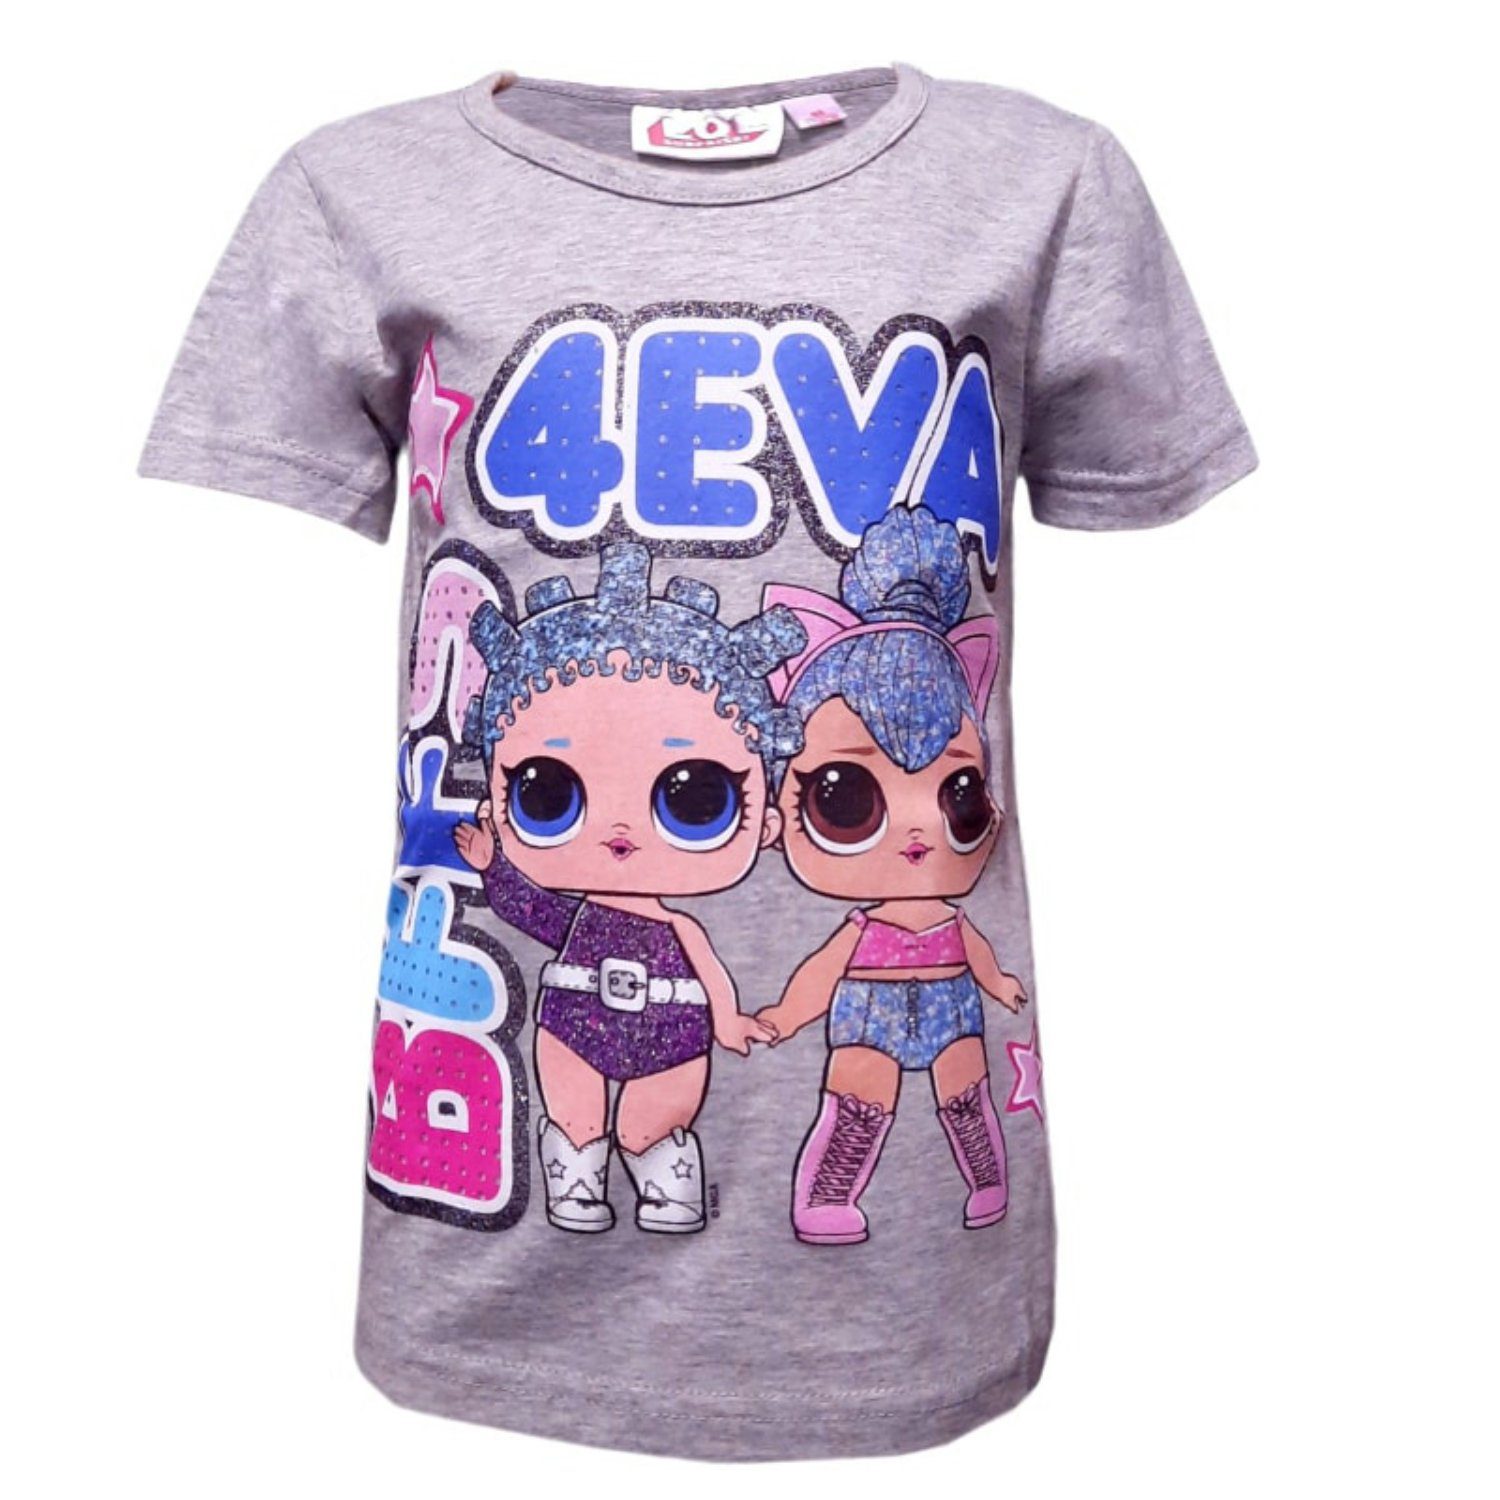 L.O.L. SURPRISE! Print-Shirt LOL Surprise 4EWA Kinder Mädchen T-Shirt Gr. 116, 100% Baumwolle Grau